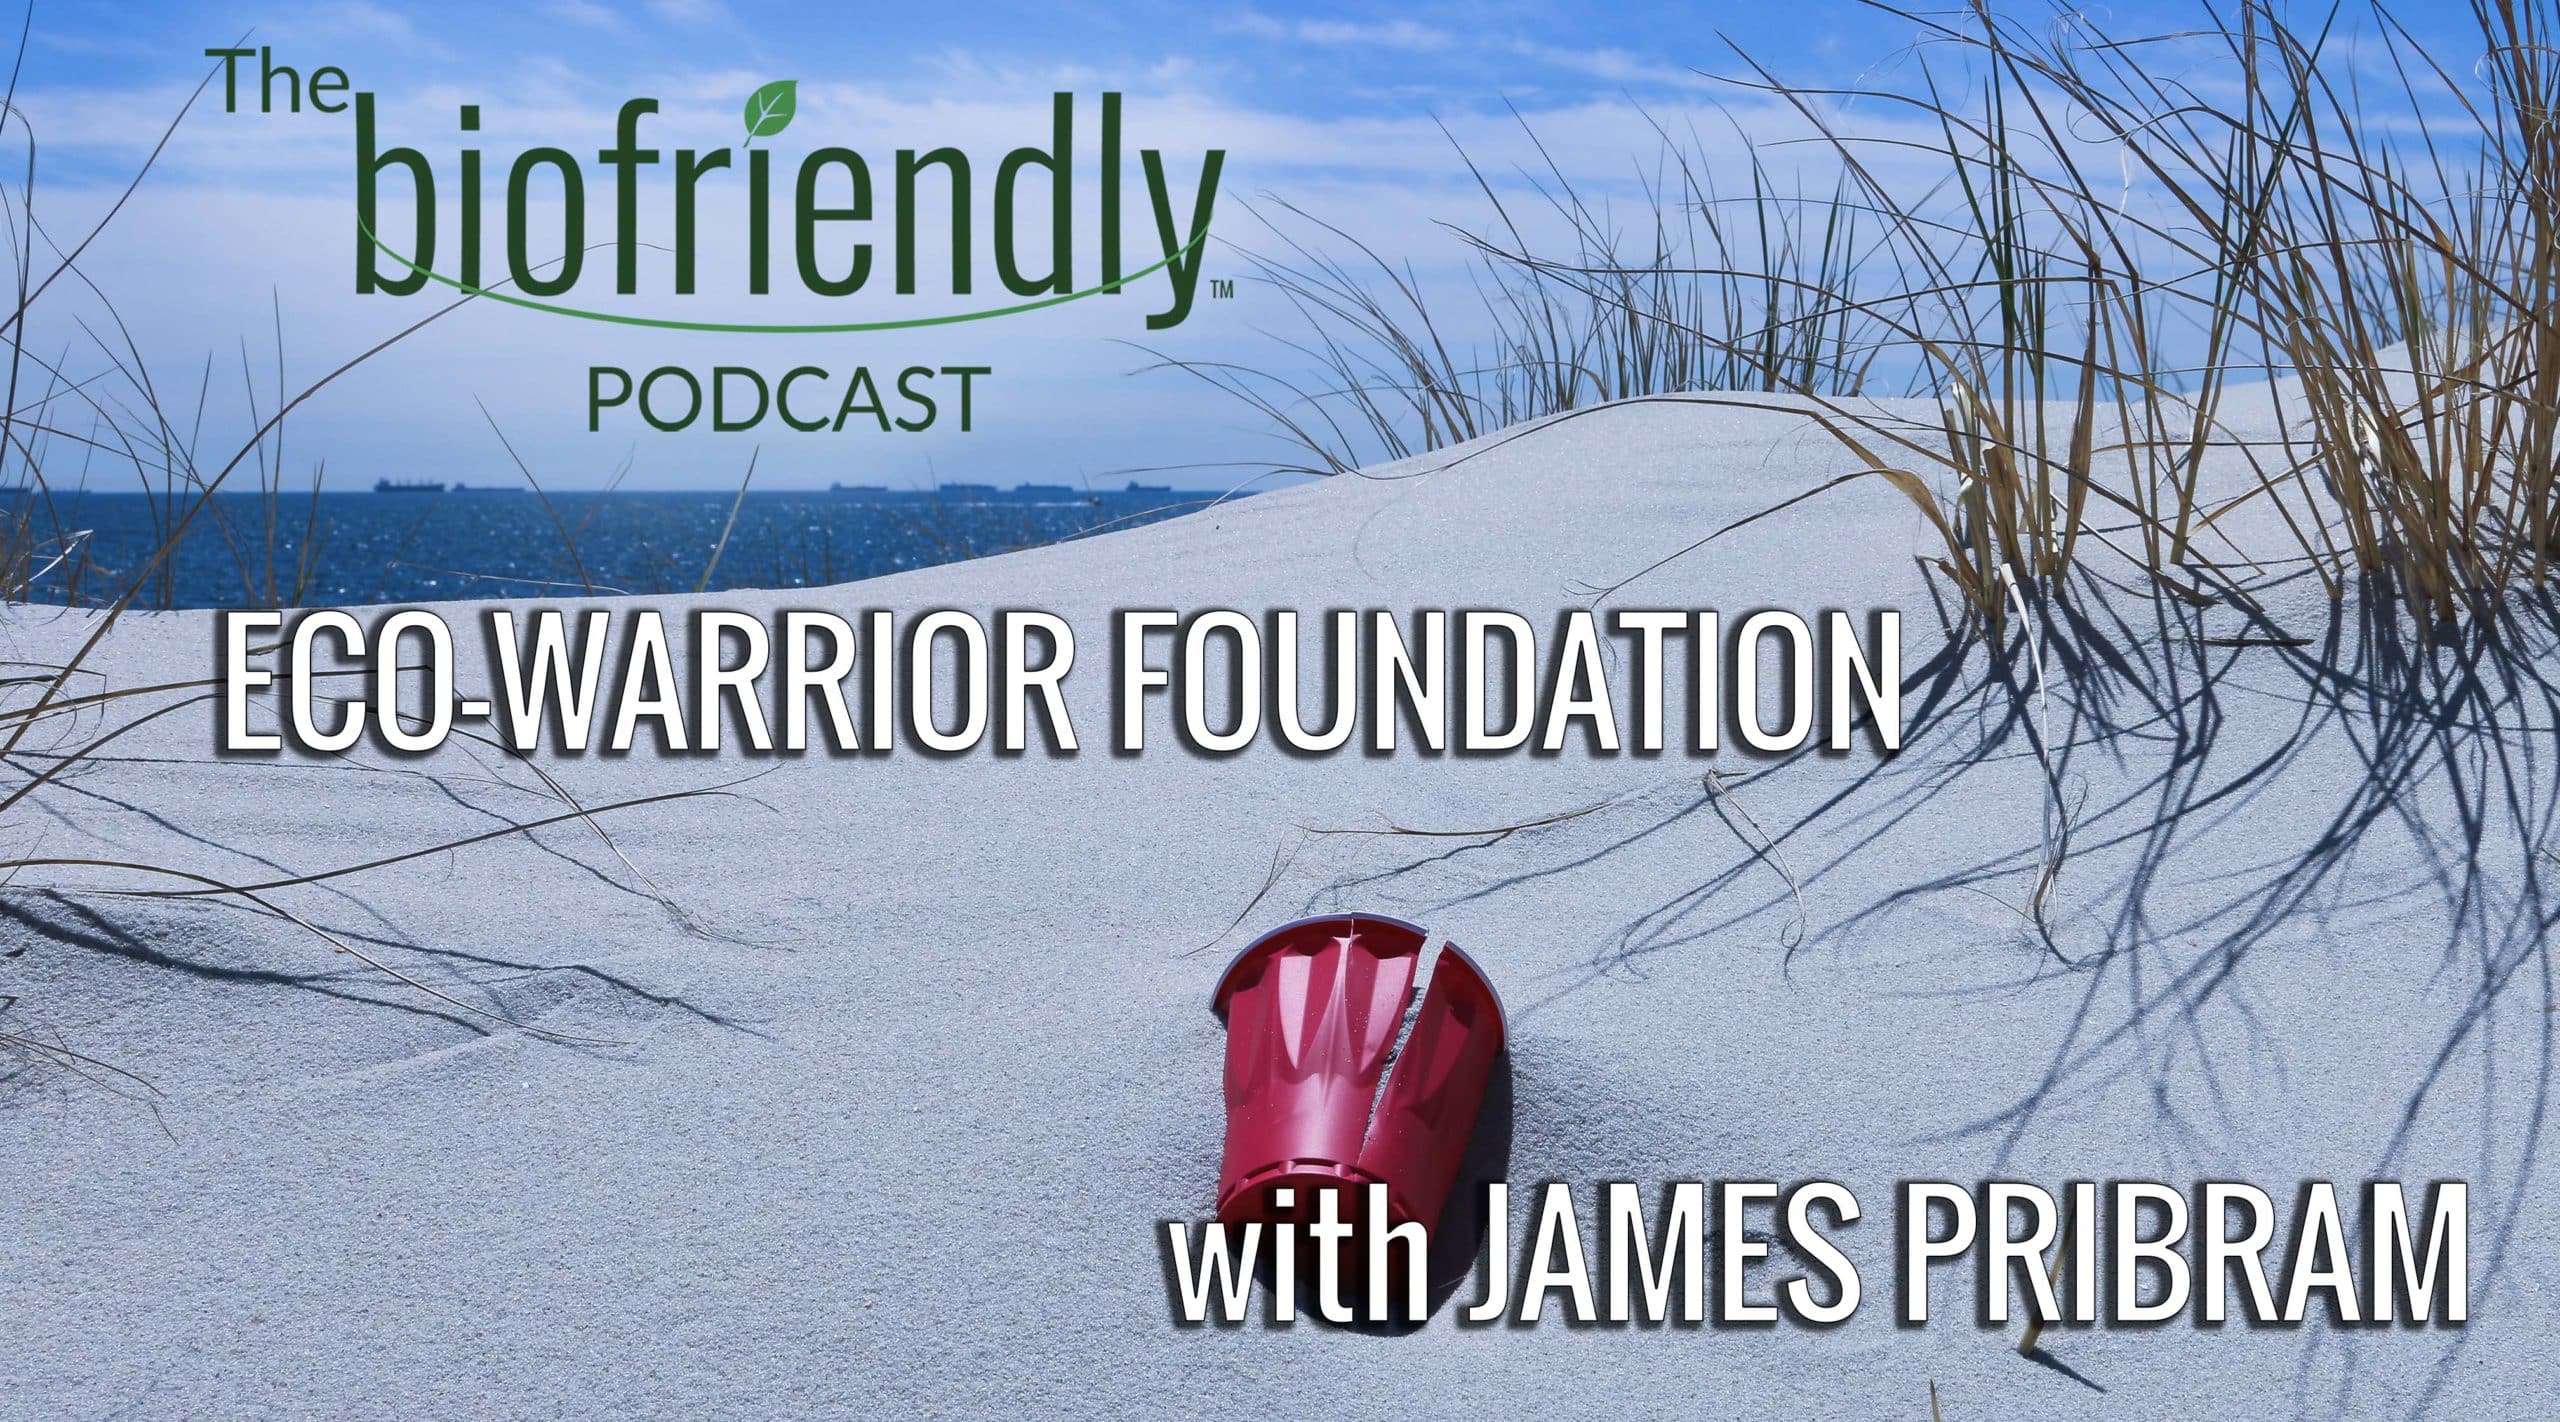 The Biofriendly Podcast - Episode 81 - ECO-Warrior Foundation with James Pribram